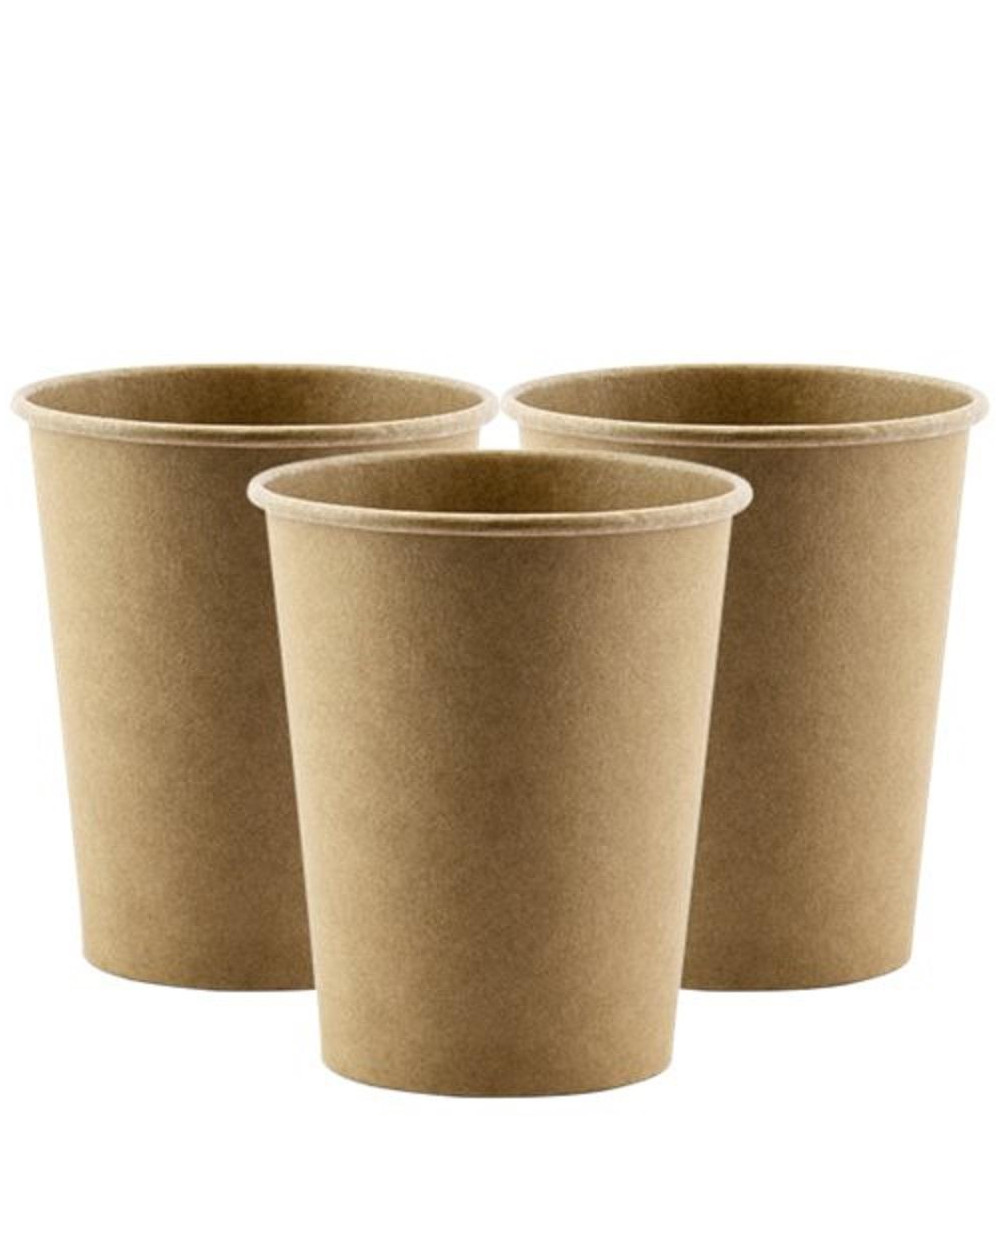 Para bebidas frías y calientes. 100 vasos desechables café carton Kraft de 240 ml vasos de papel cartón kraft desechables con paletinas de madera para café 